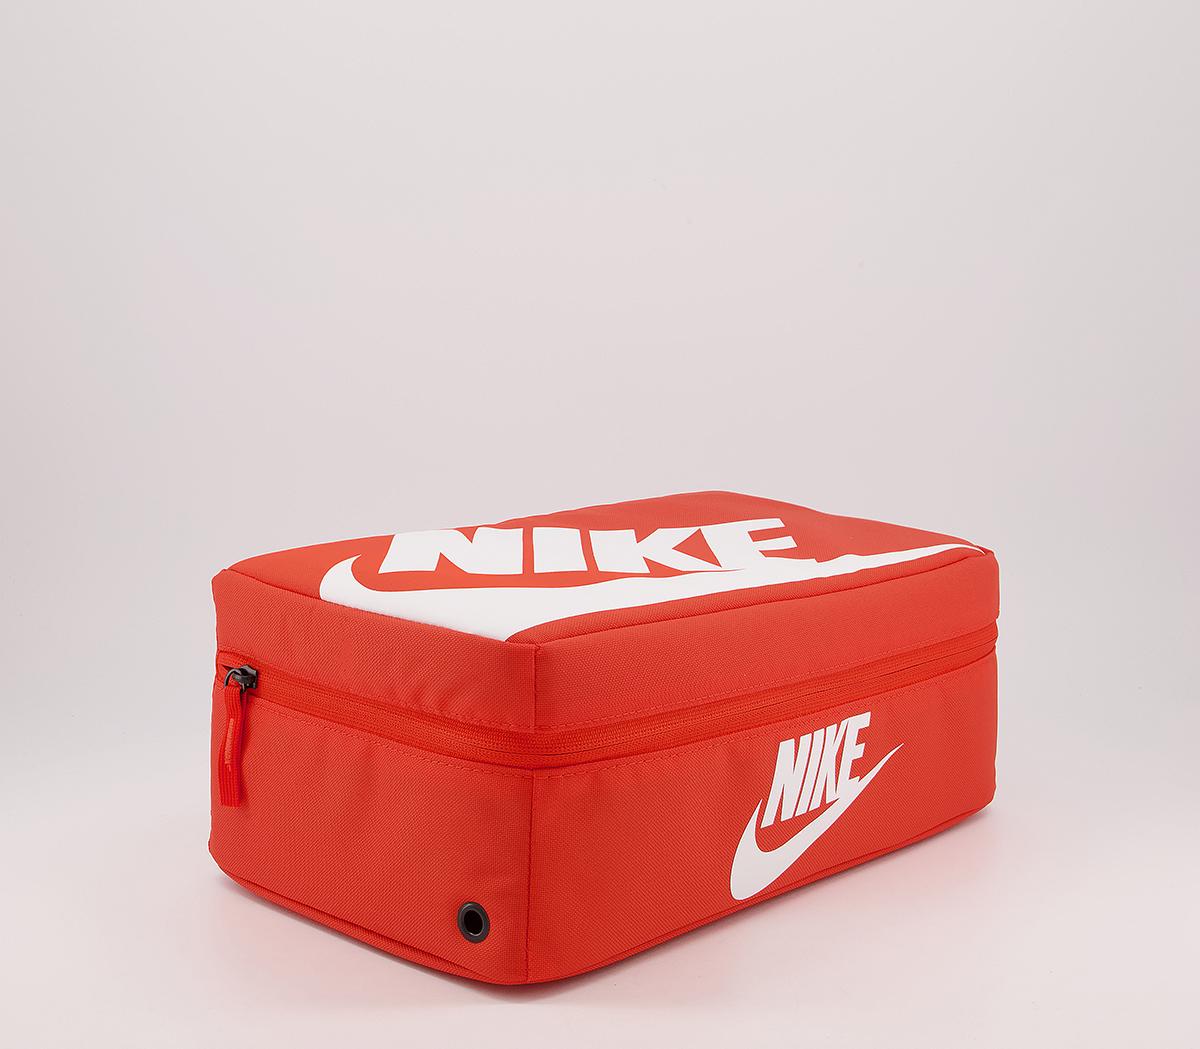 Nike Shoebox Bag Orange White - Accessories